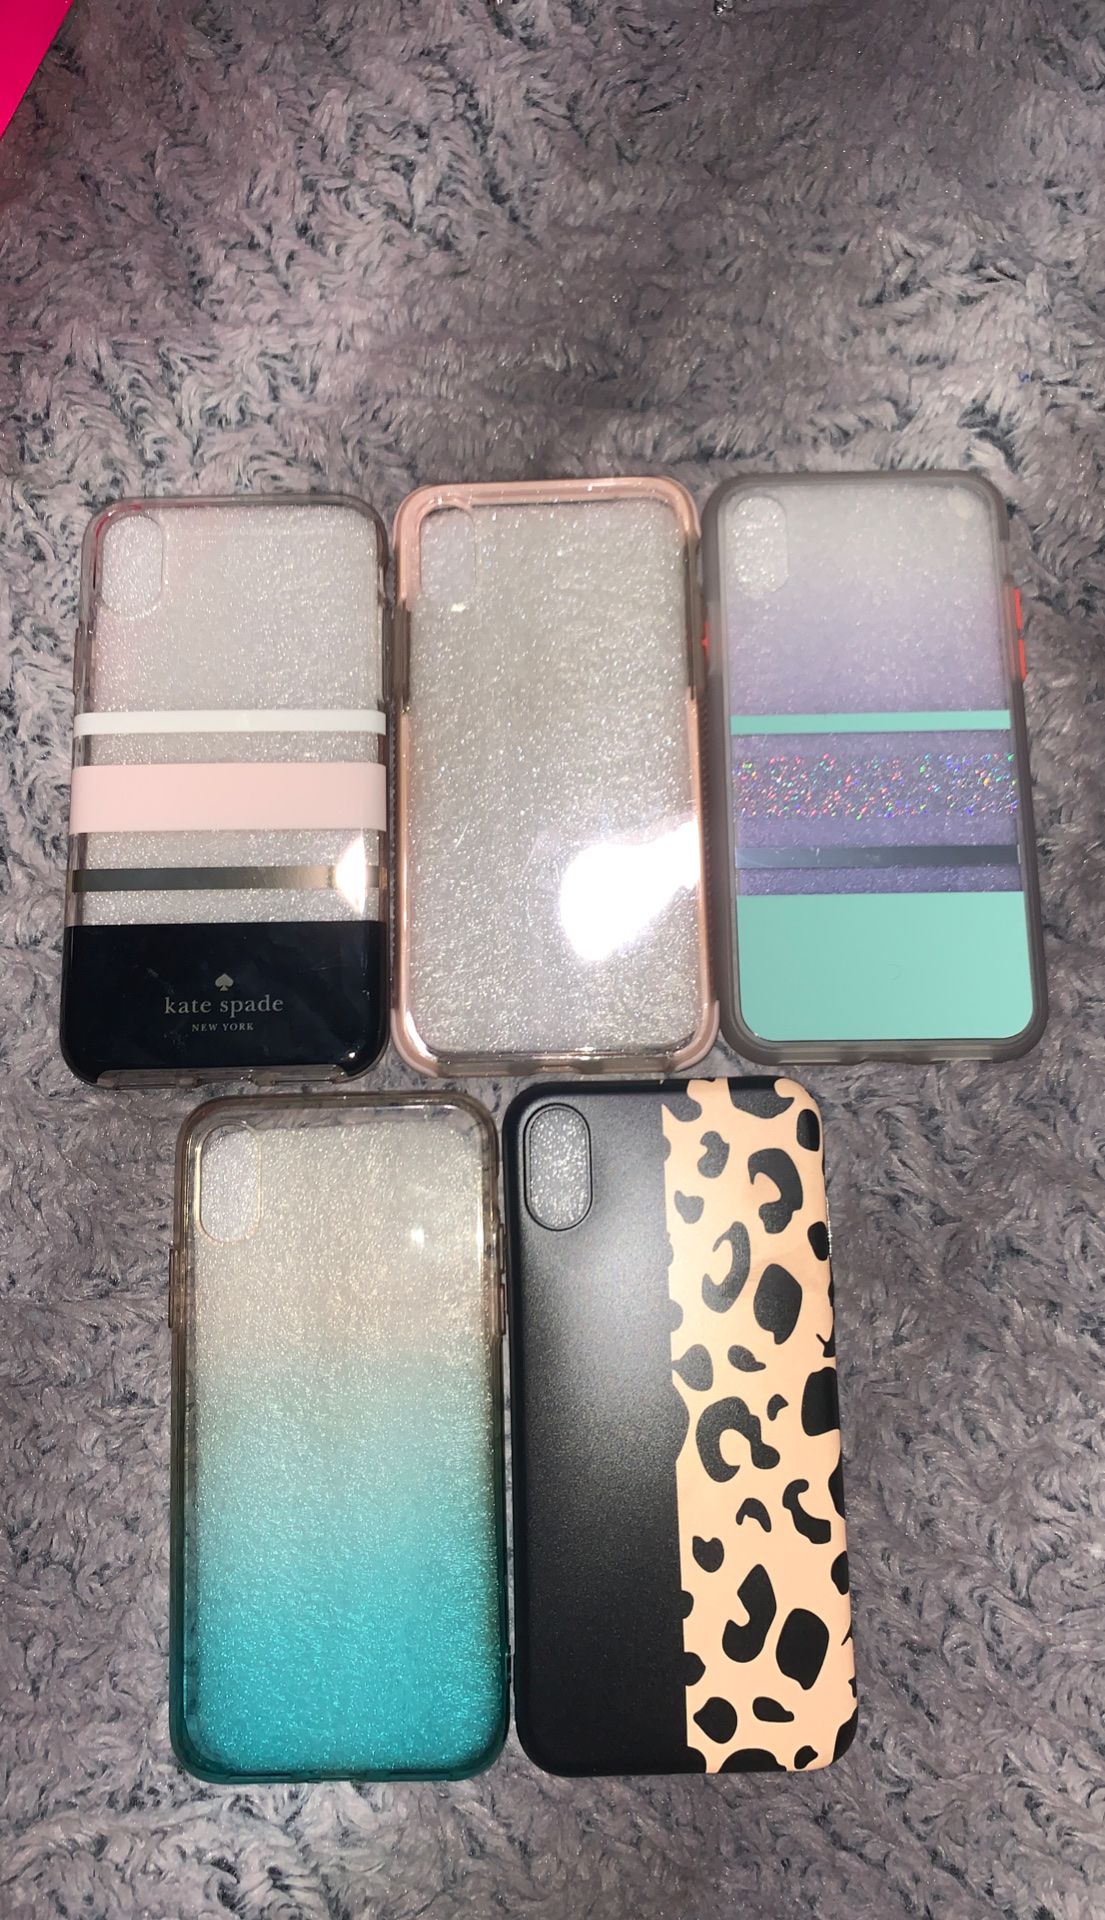 iPhone XS cases